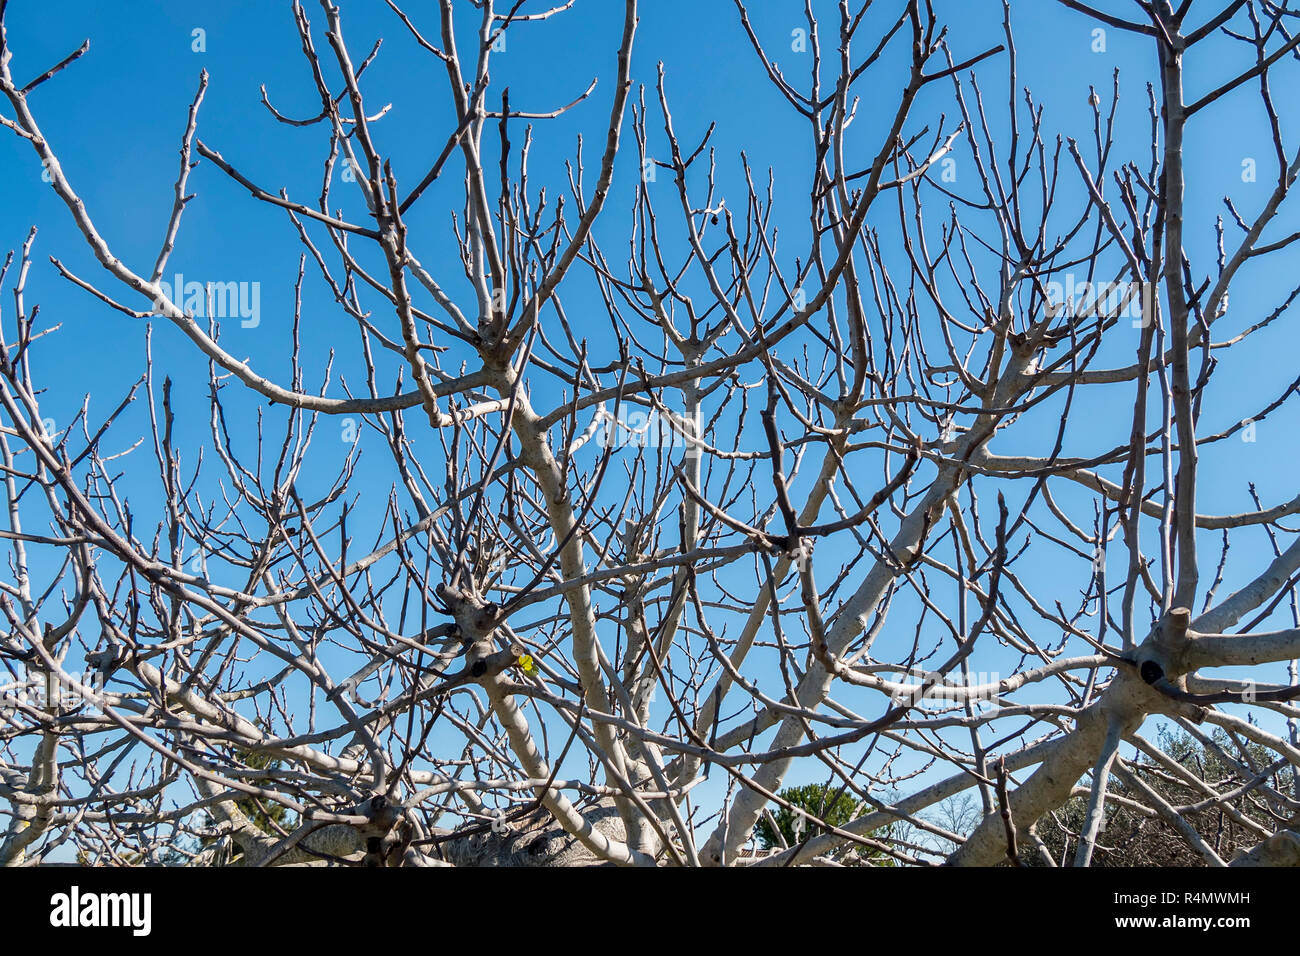 Feigenbaum im Winter blattlos Stockfotografie - Alamy